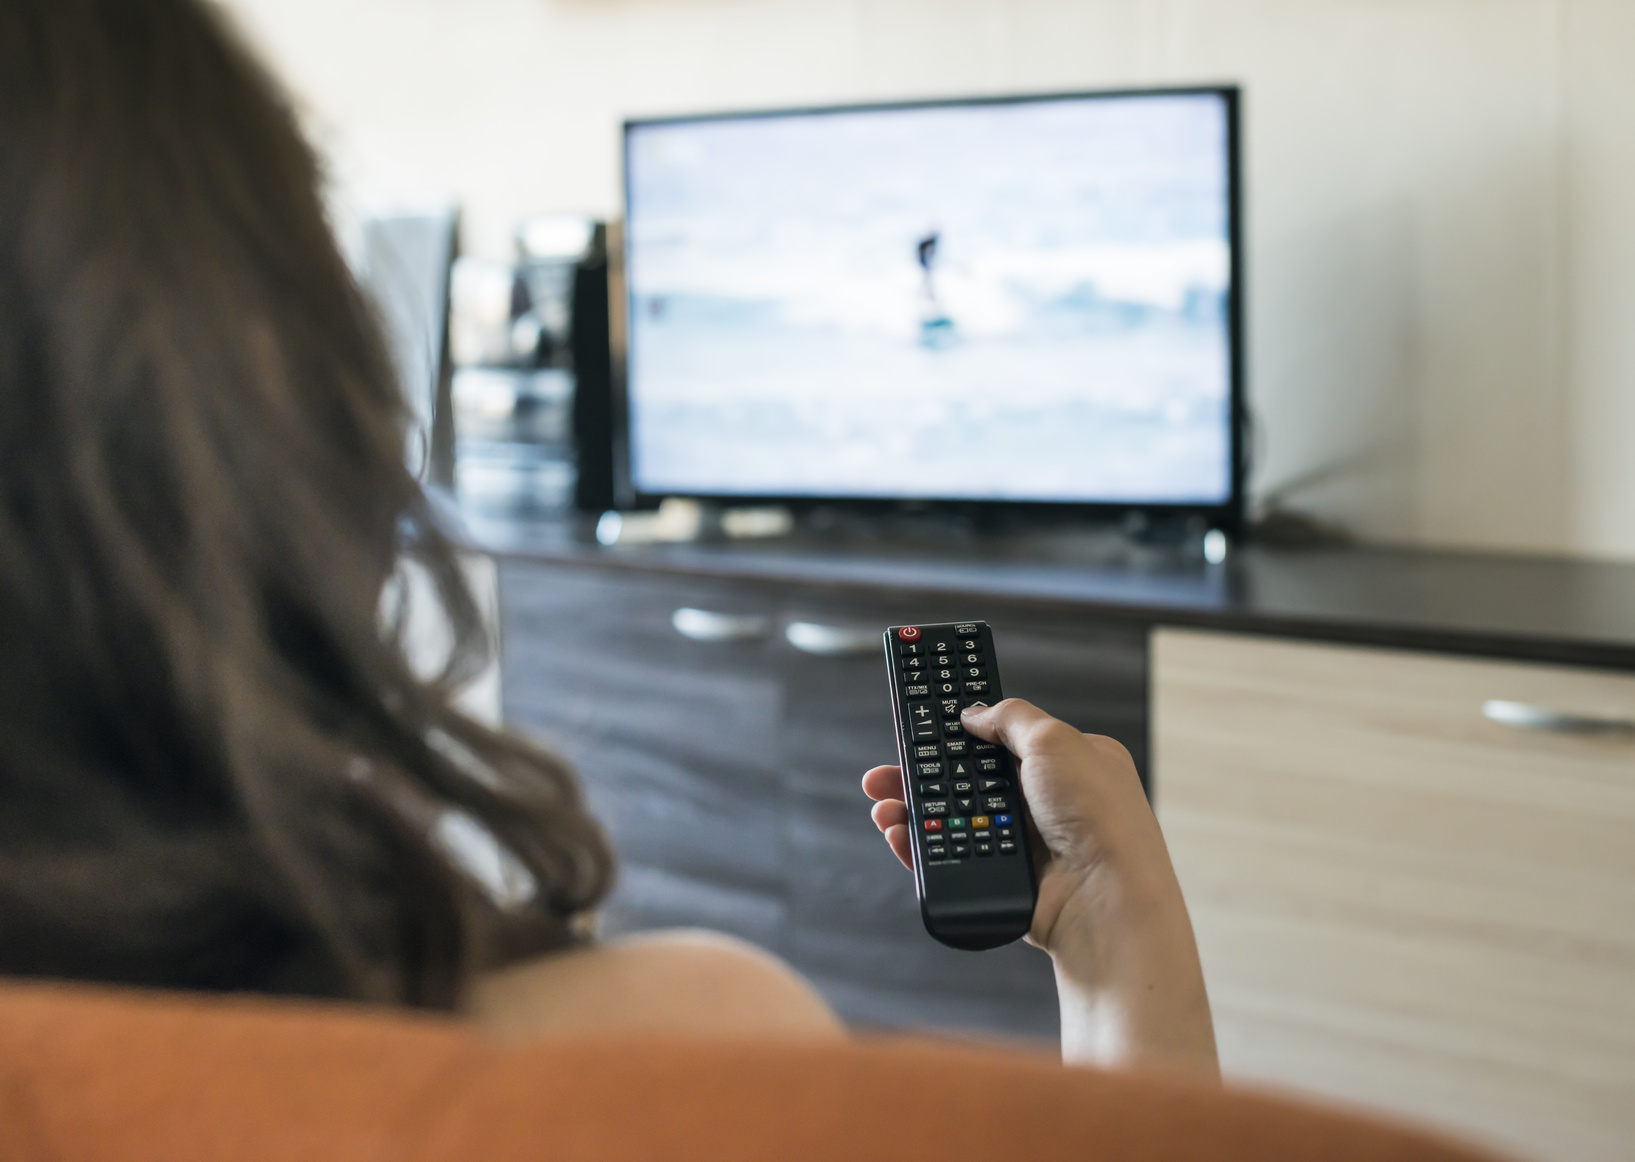 Seis de cada 10 personas con televisor consumen contenidos de tv abierta